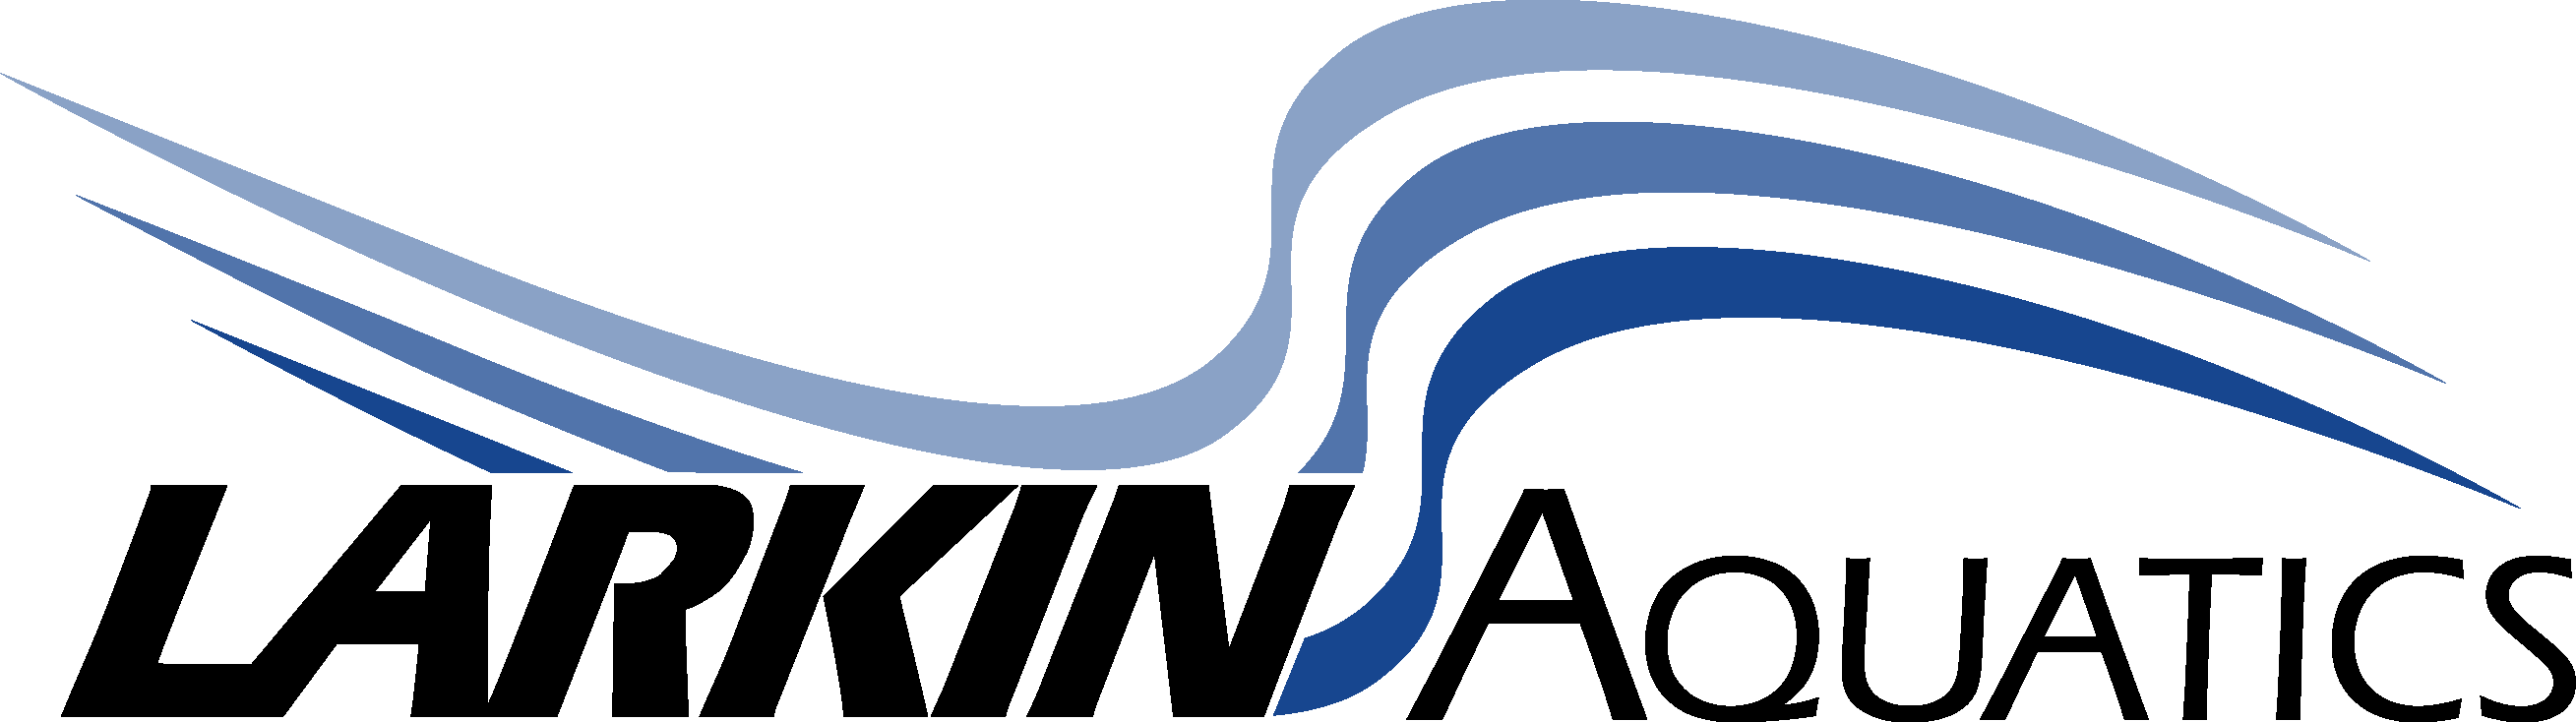 Larkin Aquatics Logo - Larkin Aquatics (2618x734)